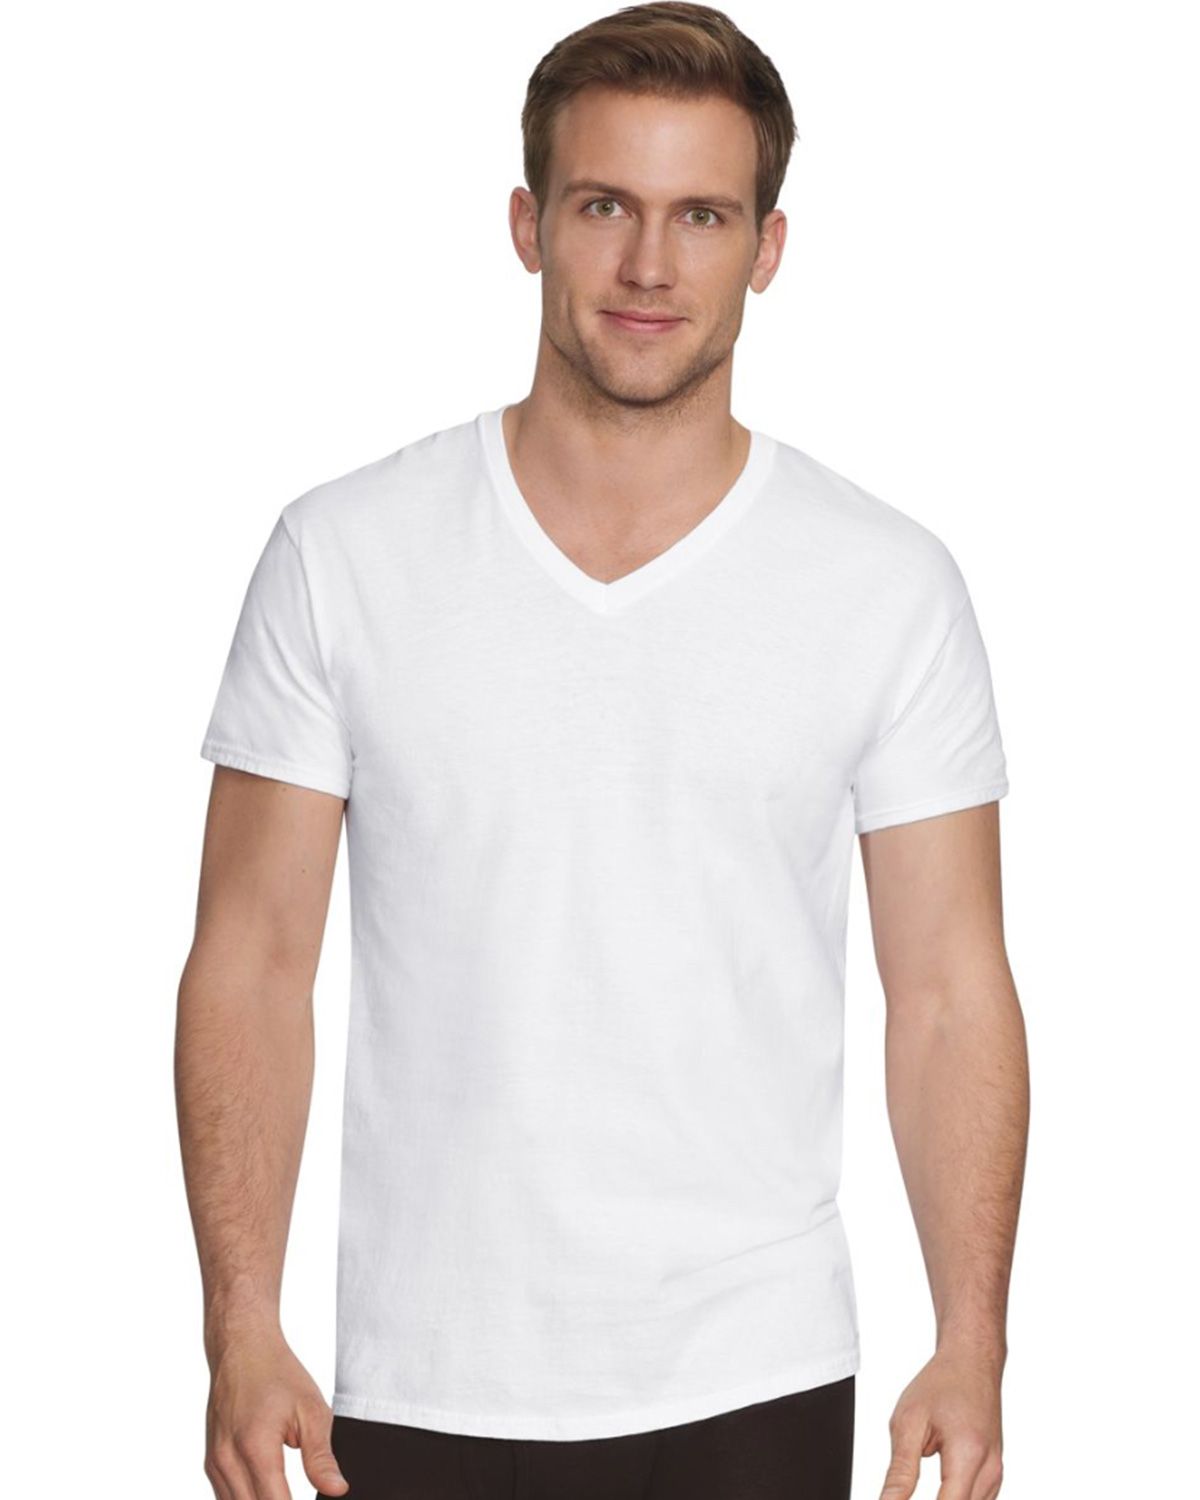 Hanes UFT2W4 Ultimate Mens Comfort Fit White V-Neck Undershirt 4-Pack